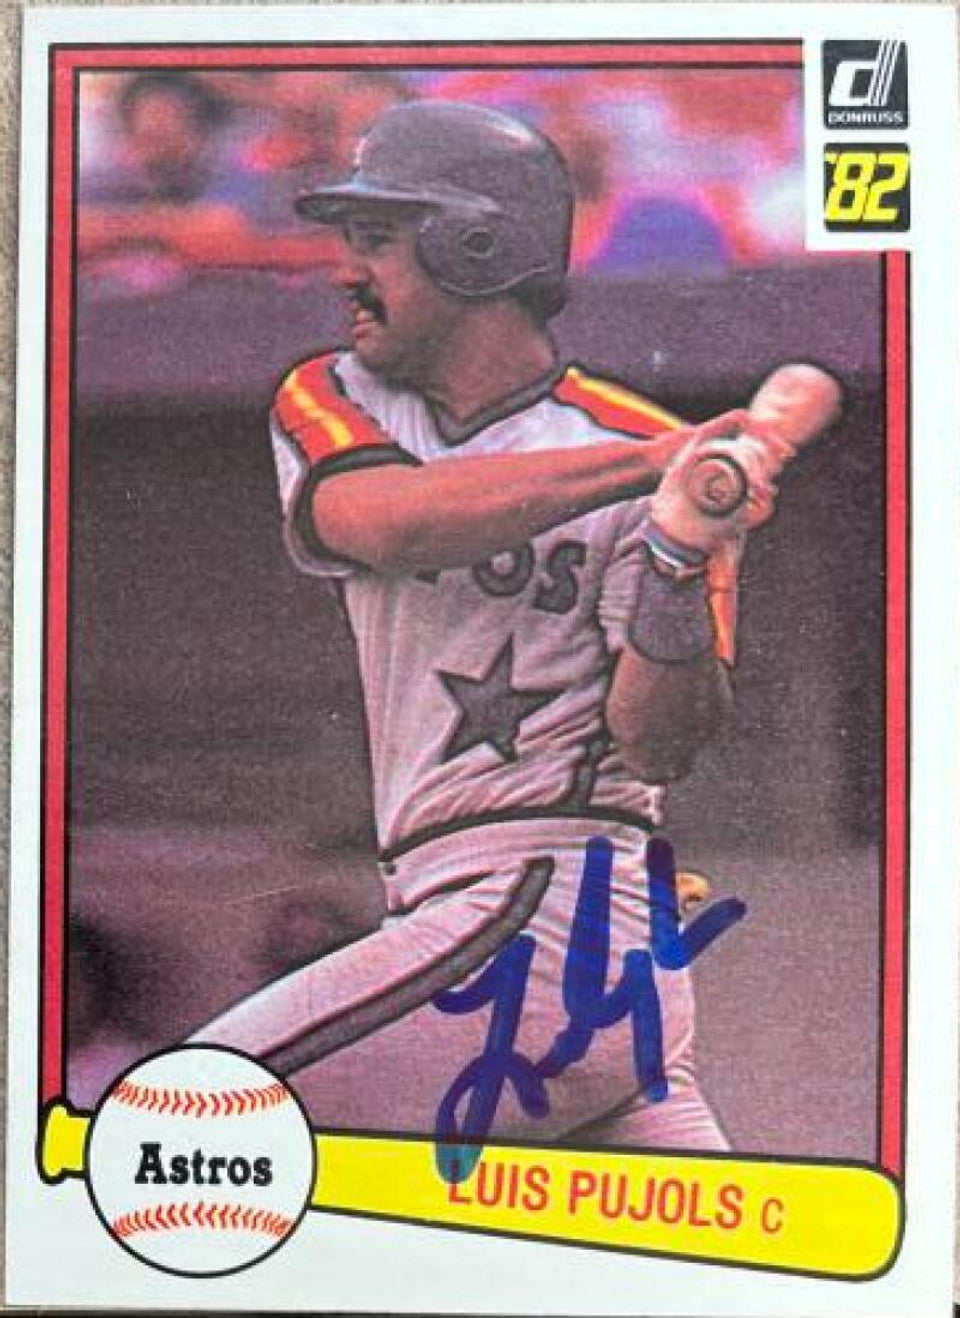 Luis Pujols Signed 1982 Donruss Baseball Card - Houston Astros